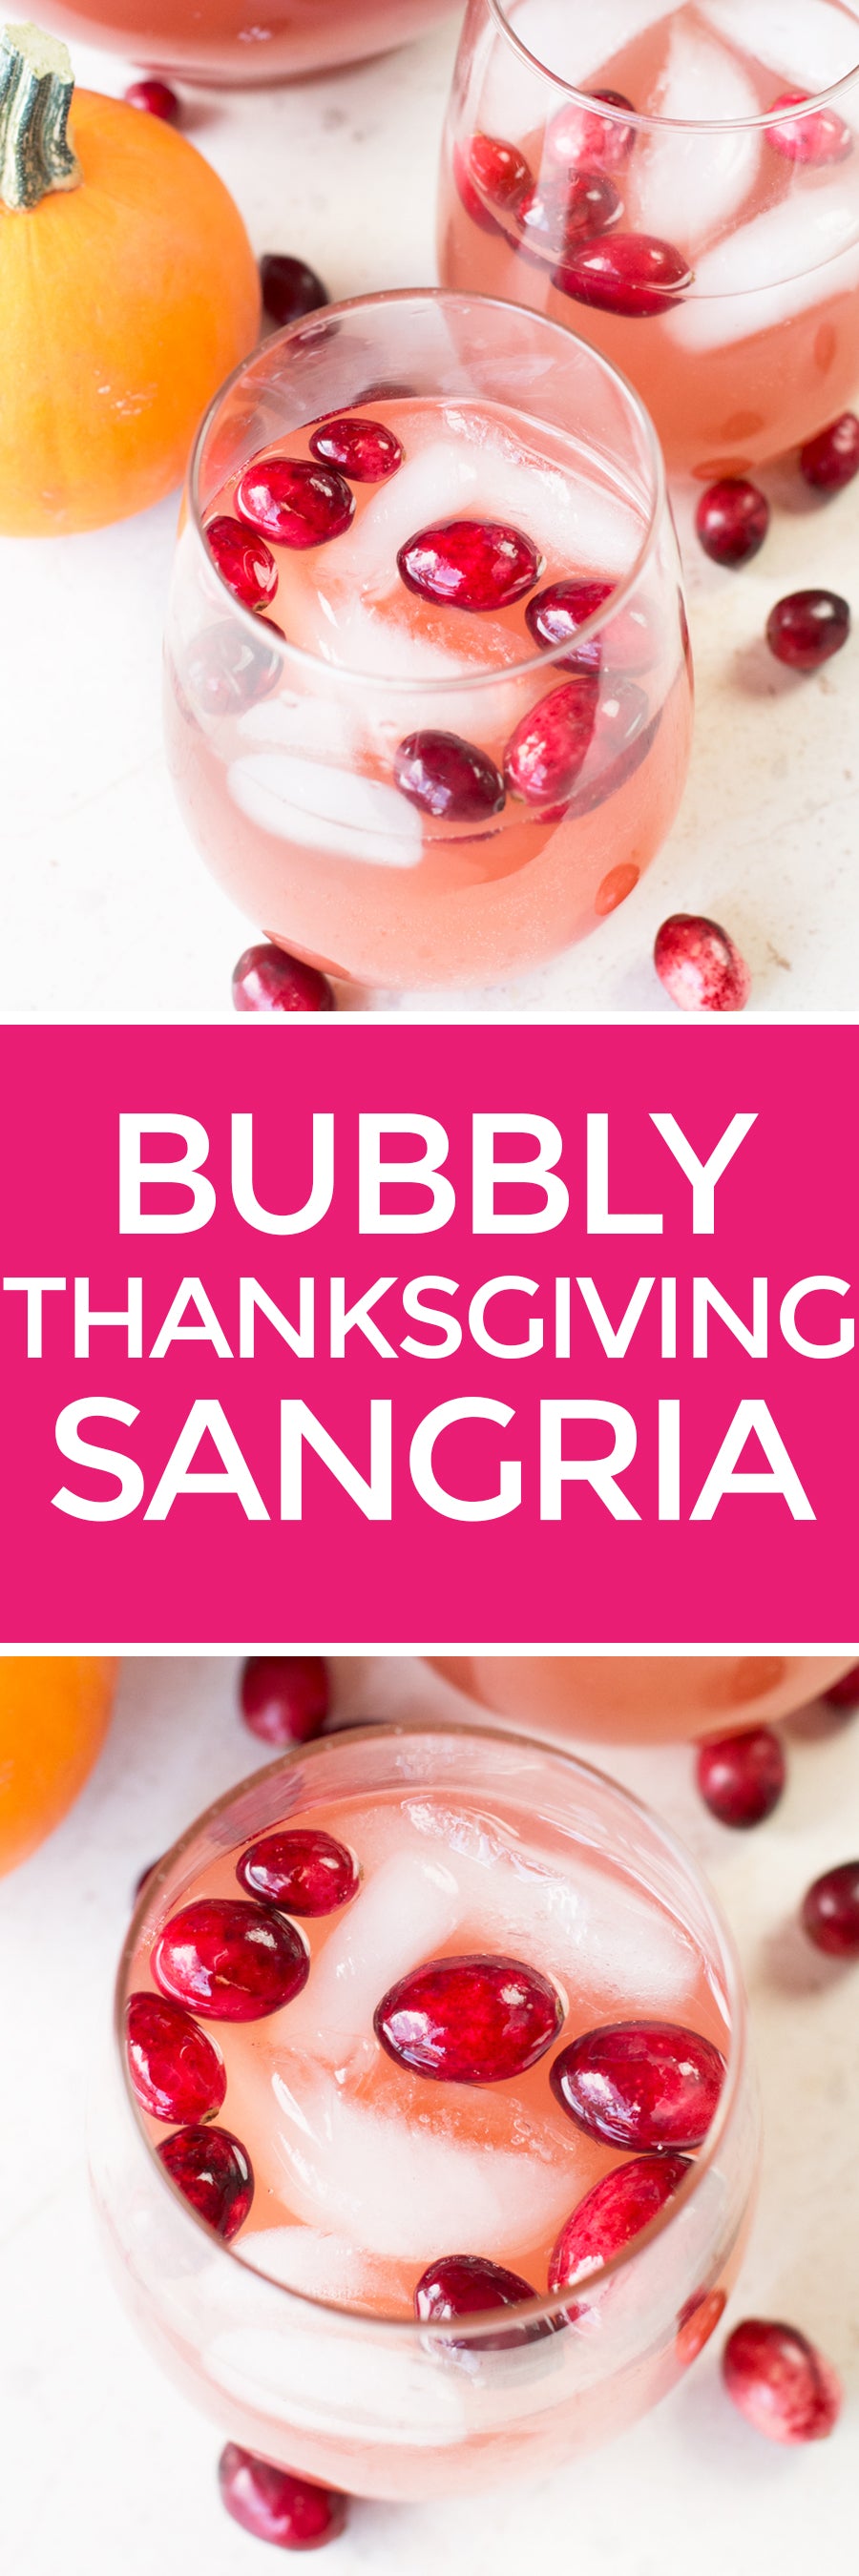 Bubbly Thanksgiving Sangria | pigofthemonth.com #thanksgiving #cocktail